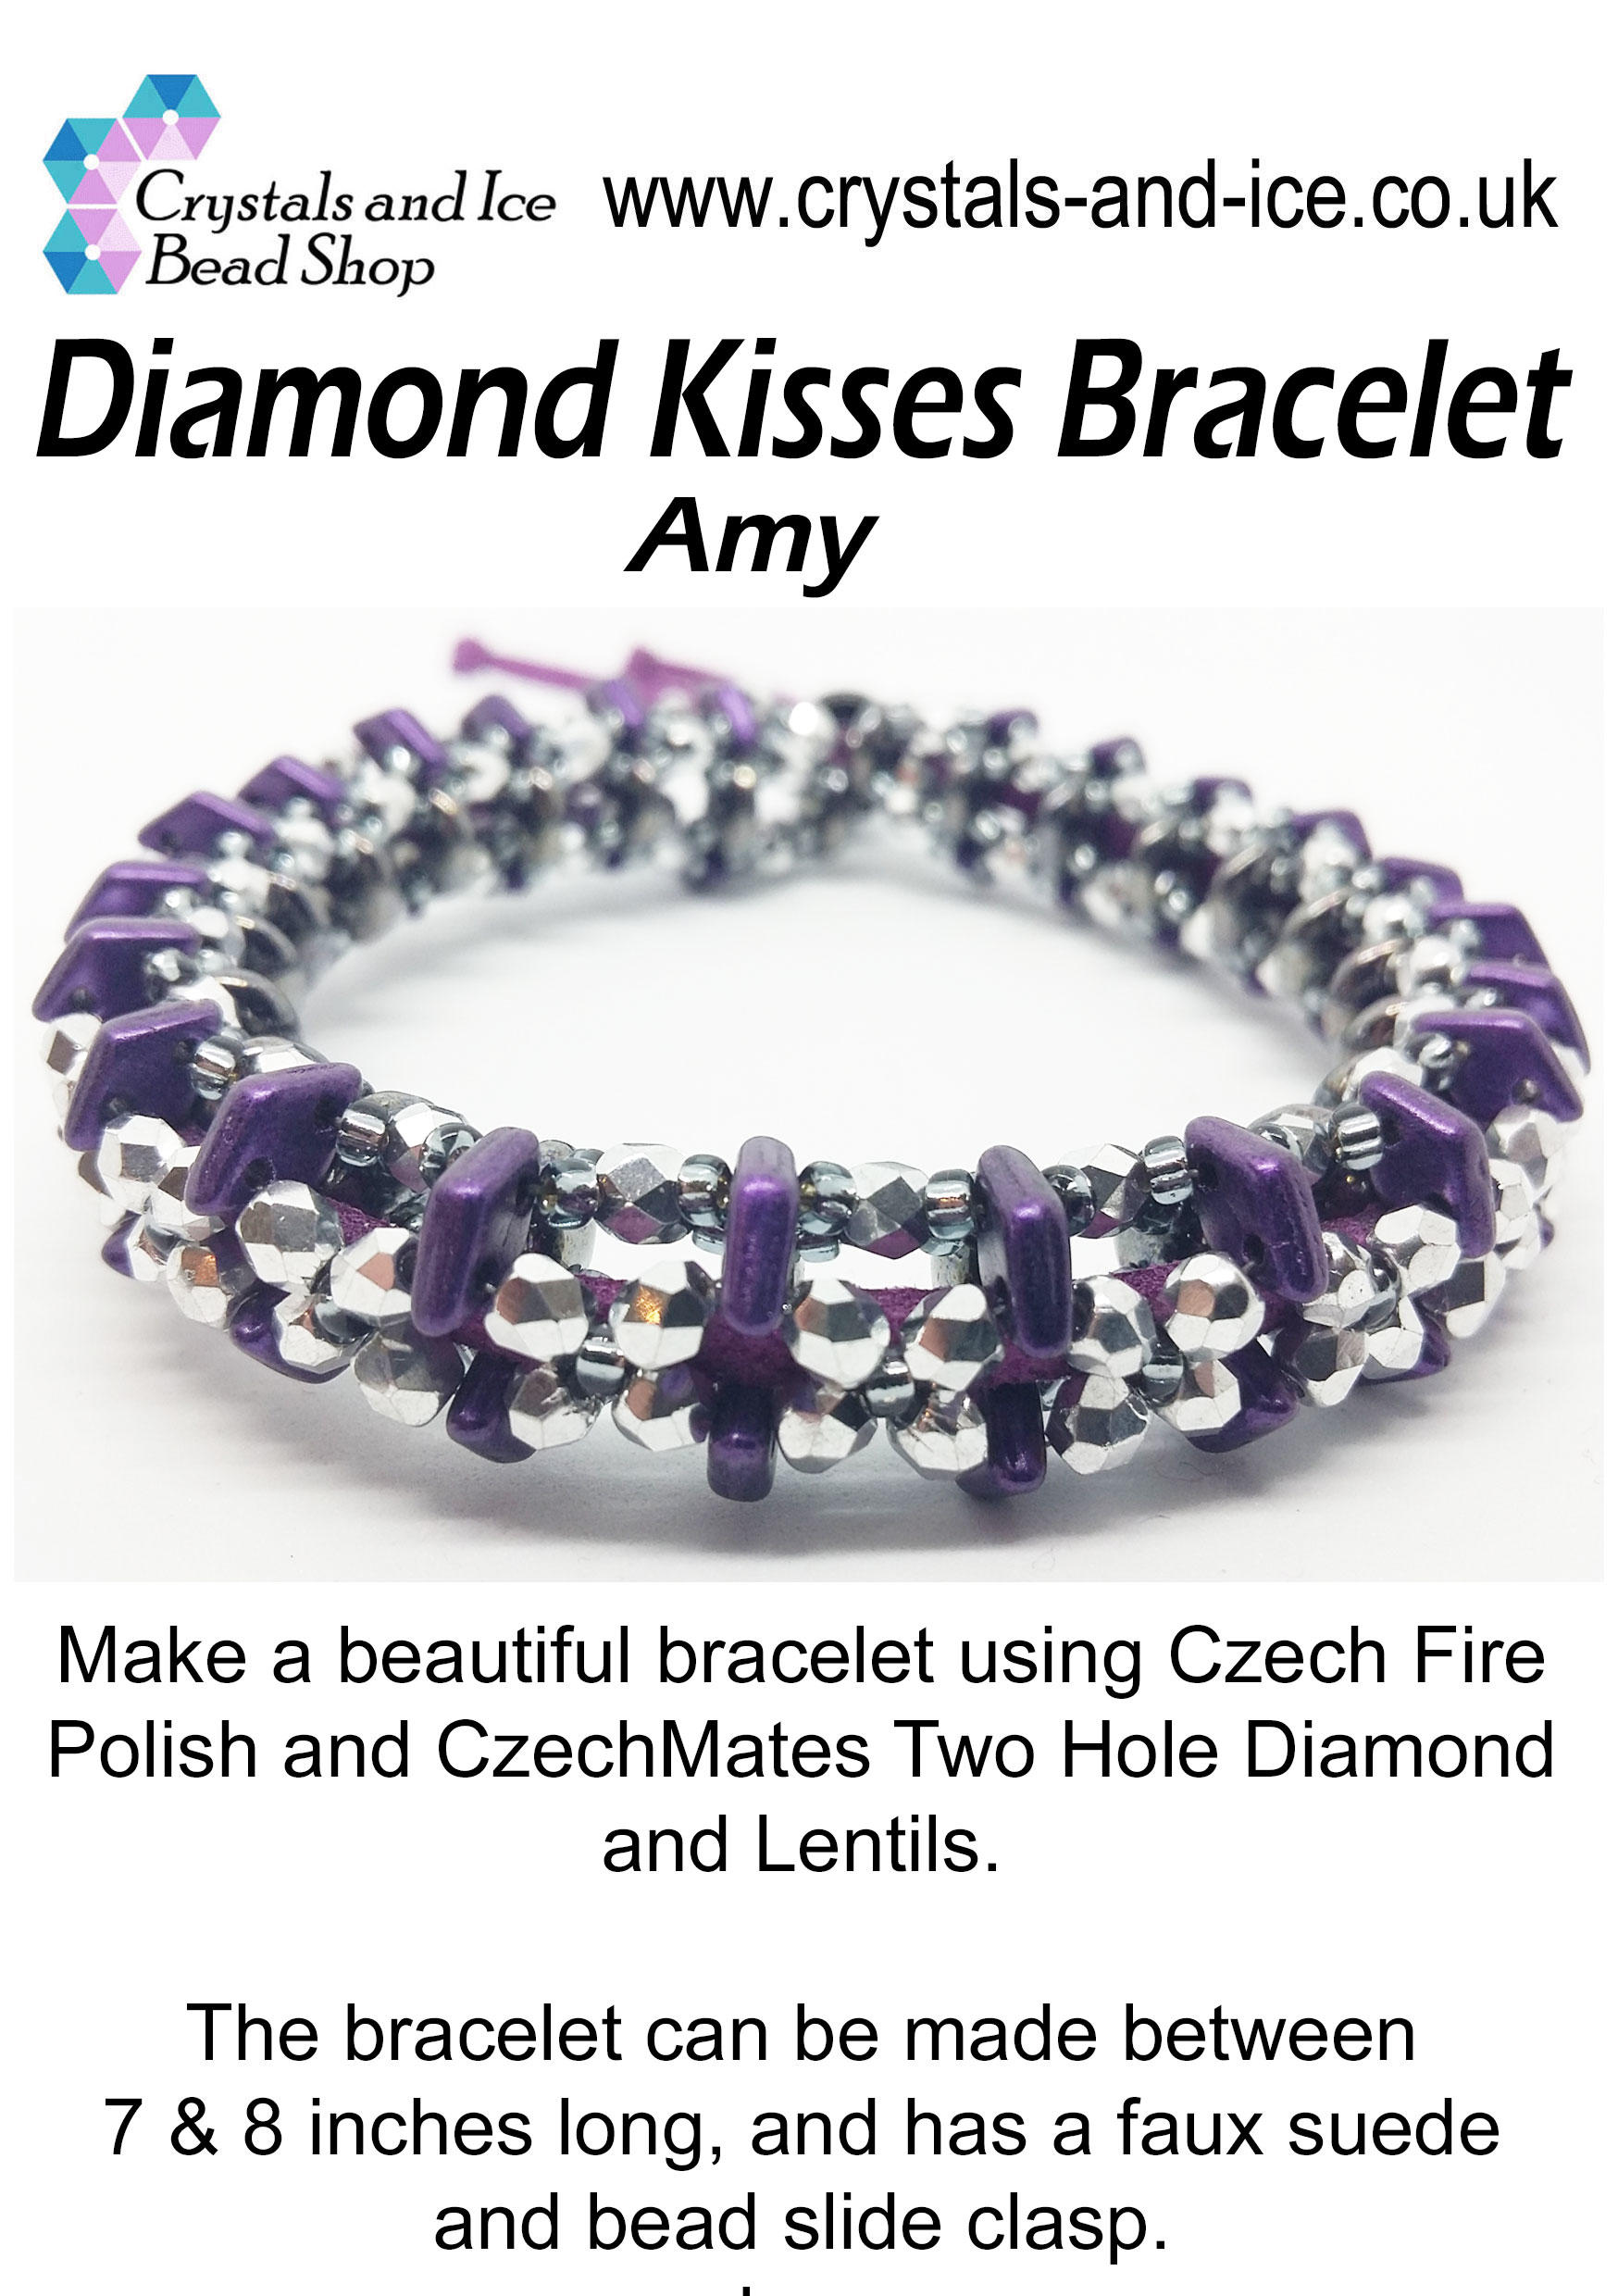 Diamond Kisses Bracelet Kit - Amy